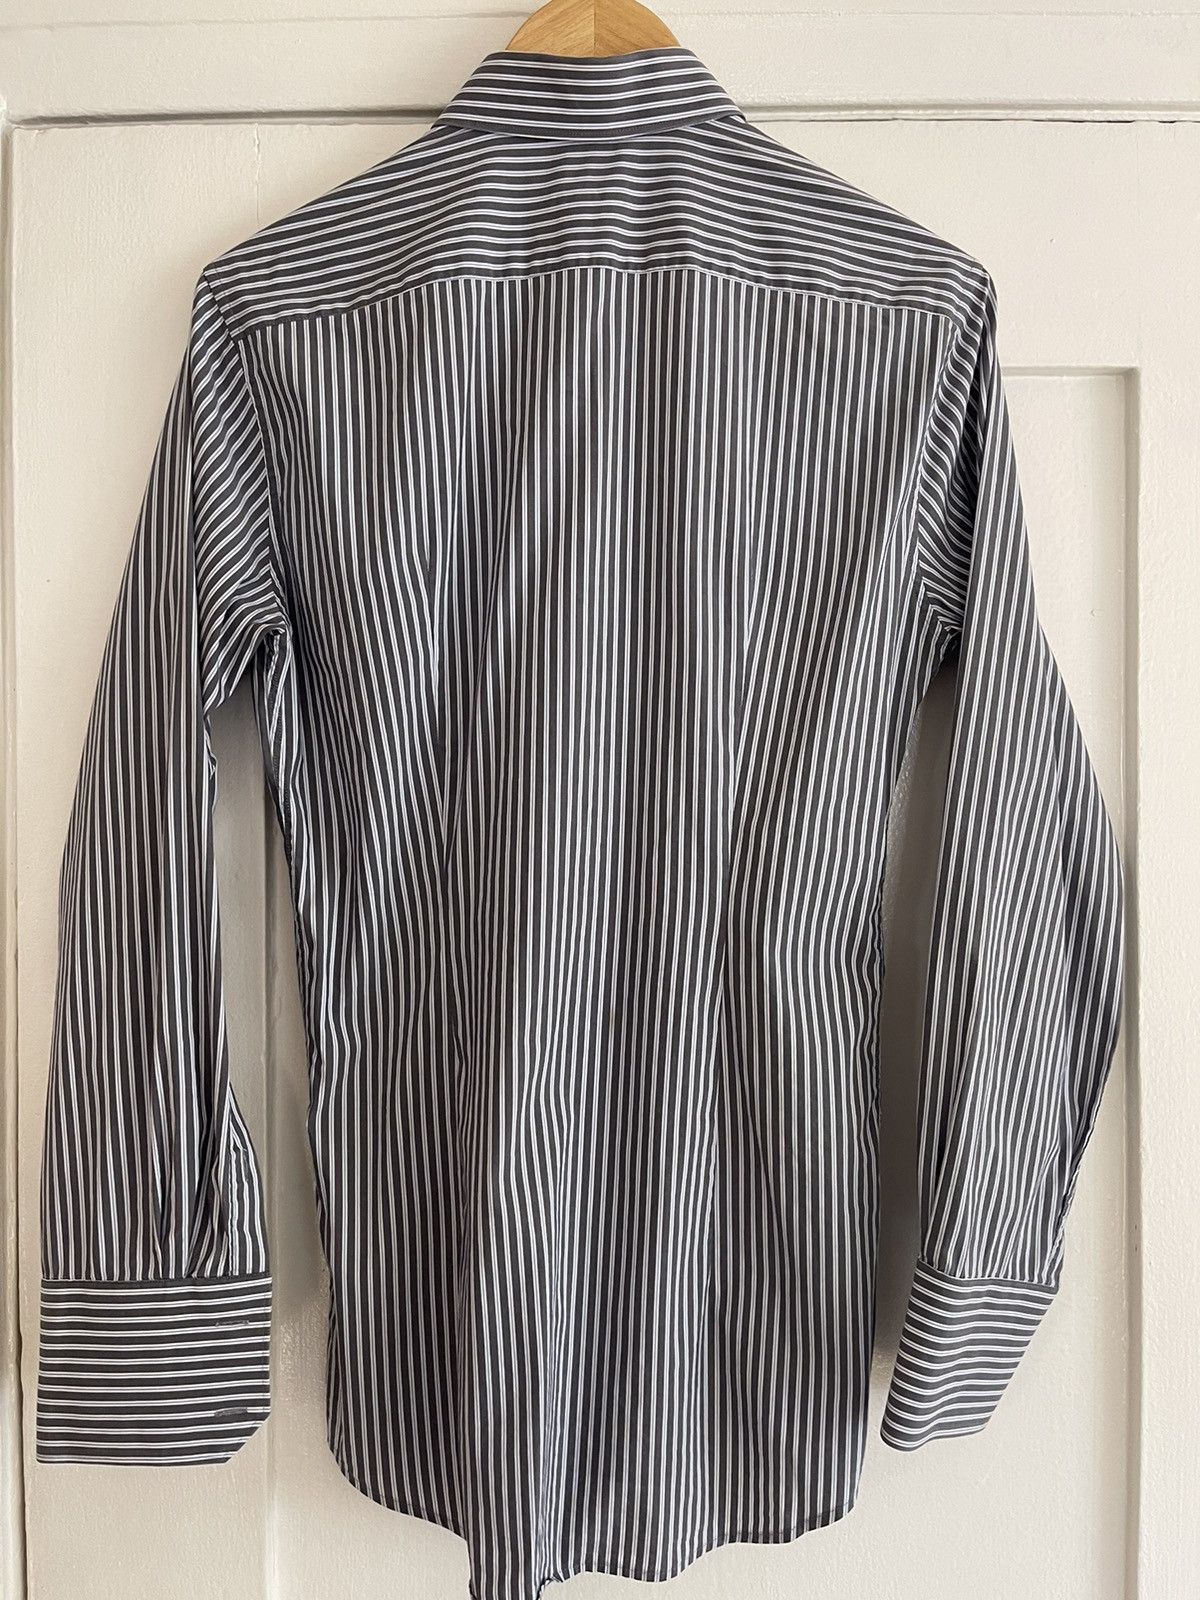 Miu Miu Miu Miu Grey/White/Blue Stripe Button-up Shirt Size XS / US 0-2 / IT 36-38 - 4 Thumbnail